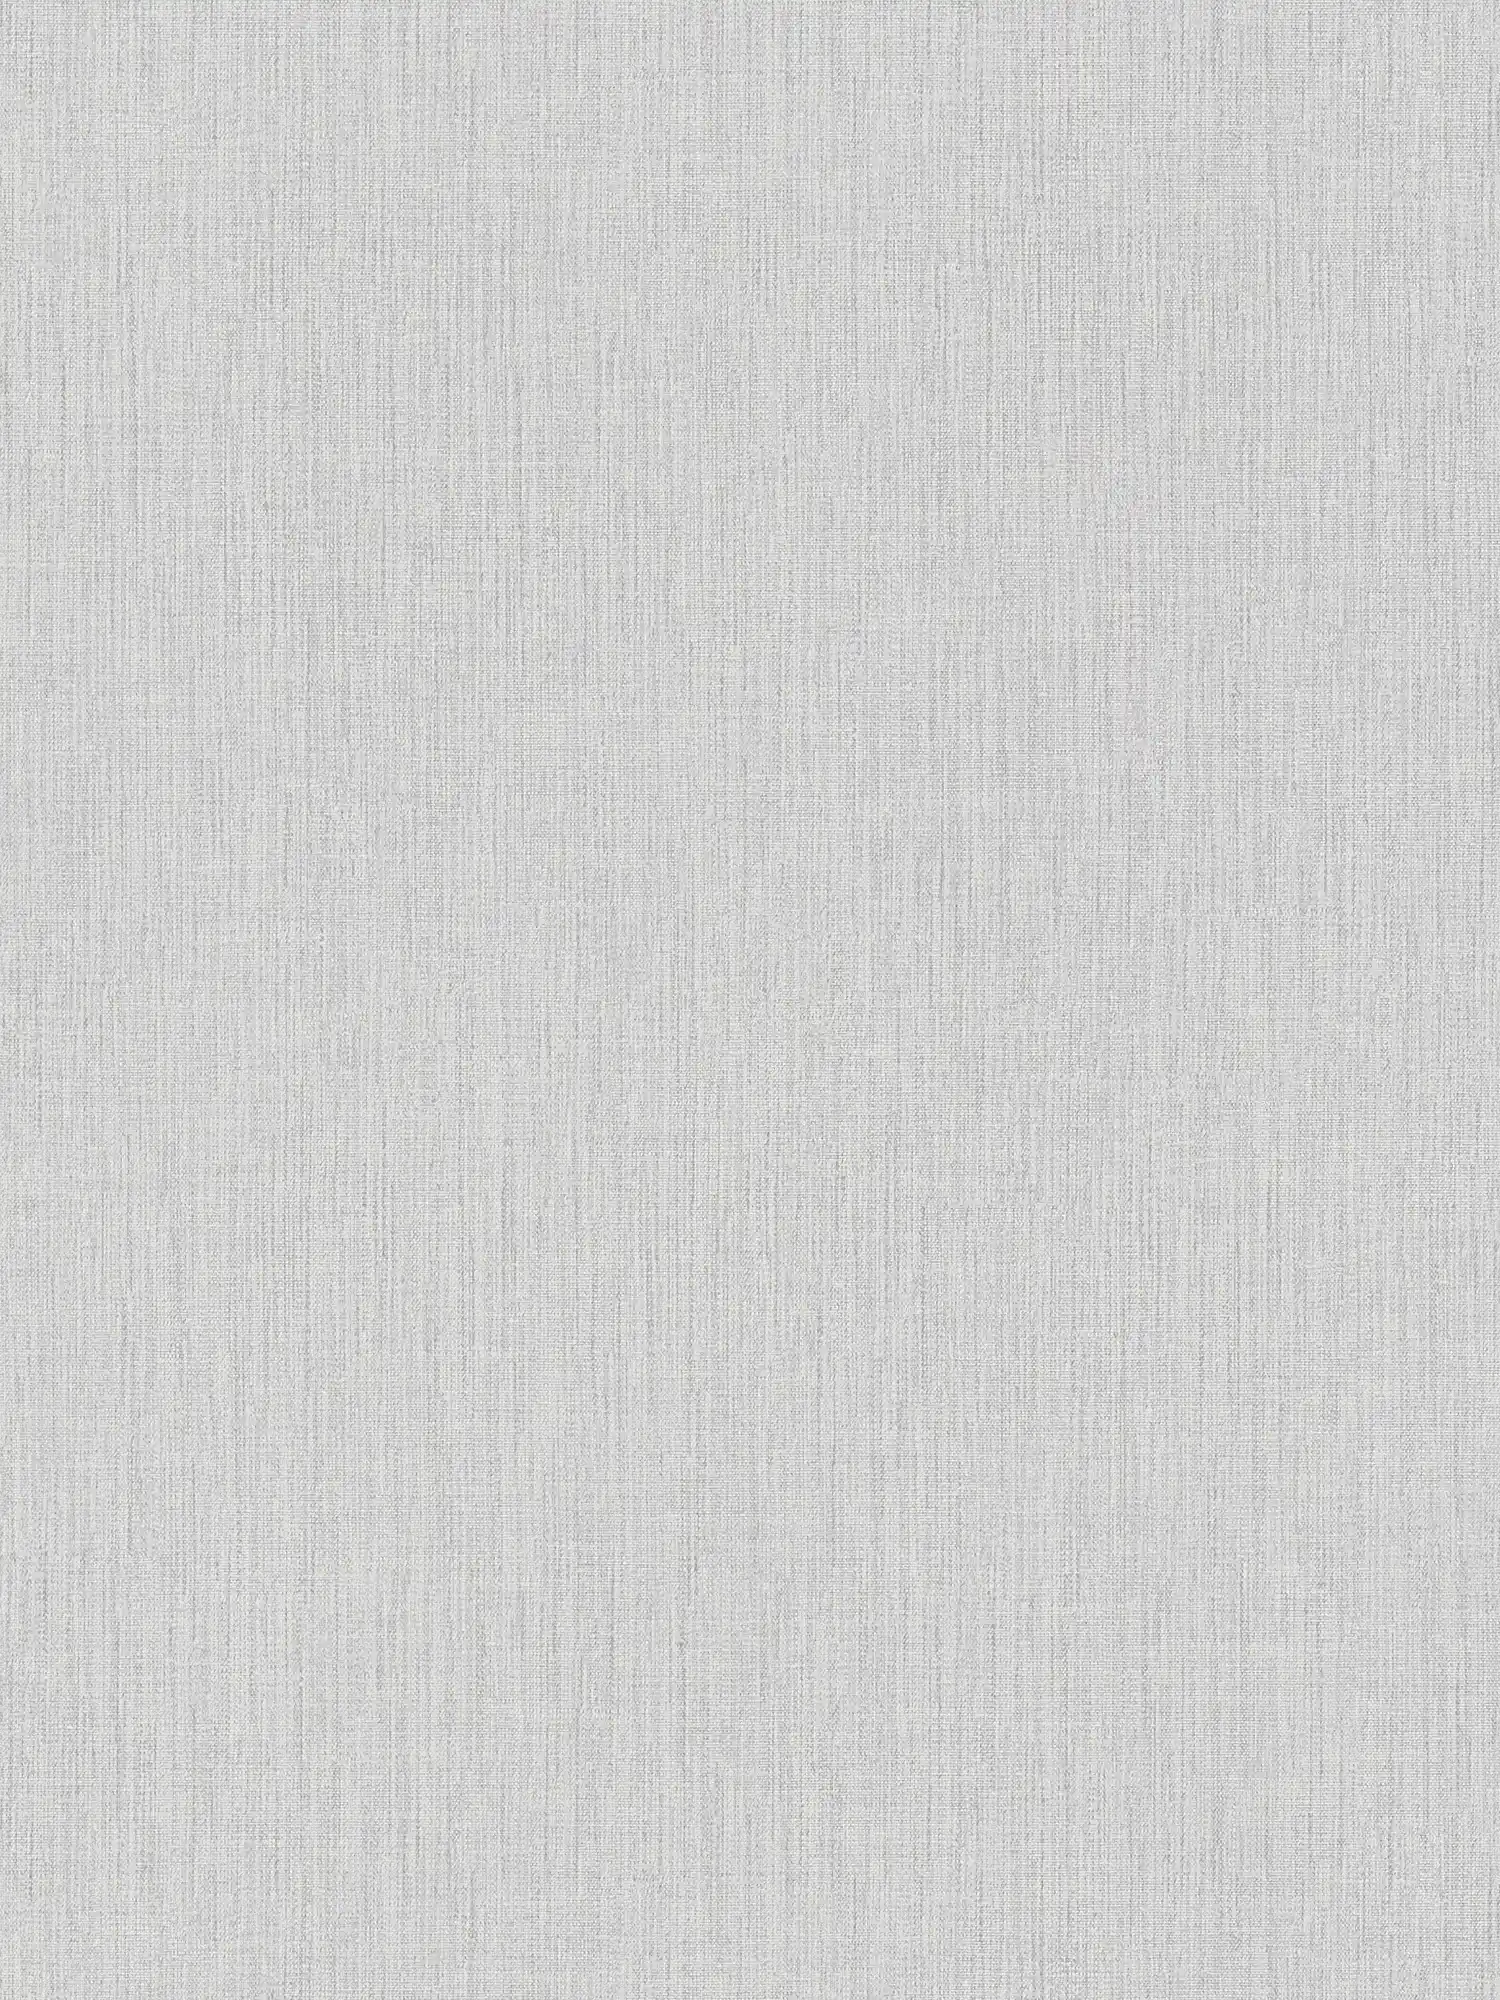 Vliestapete Leinenoptik mit Ton-in-Ton-Muster – Rosa, Grau, Weiß
